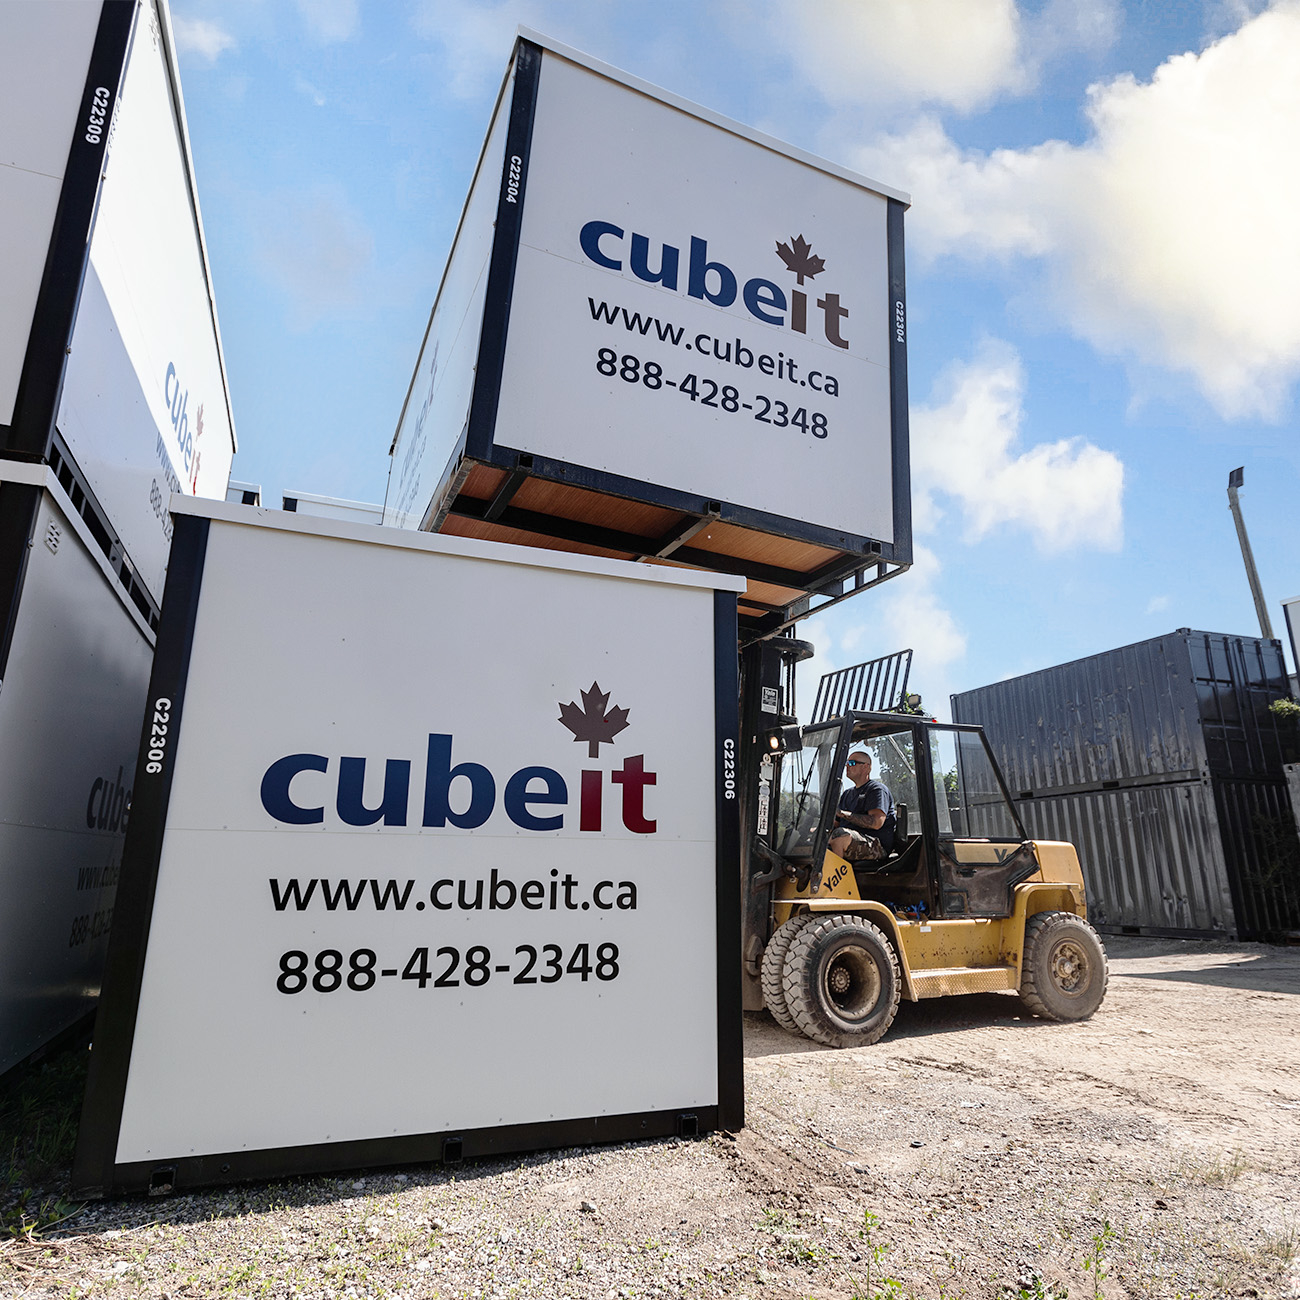 Cubeit Portable Storage - Utopia - Moving Services & Storage Facilities